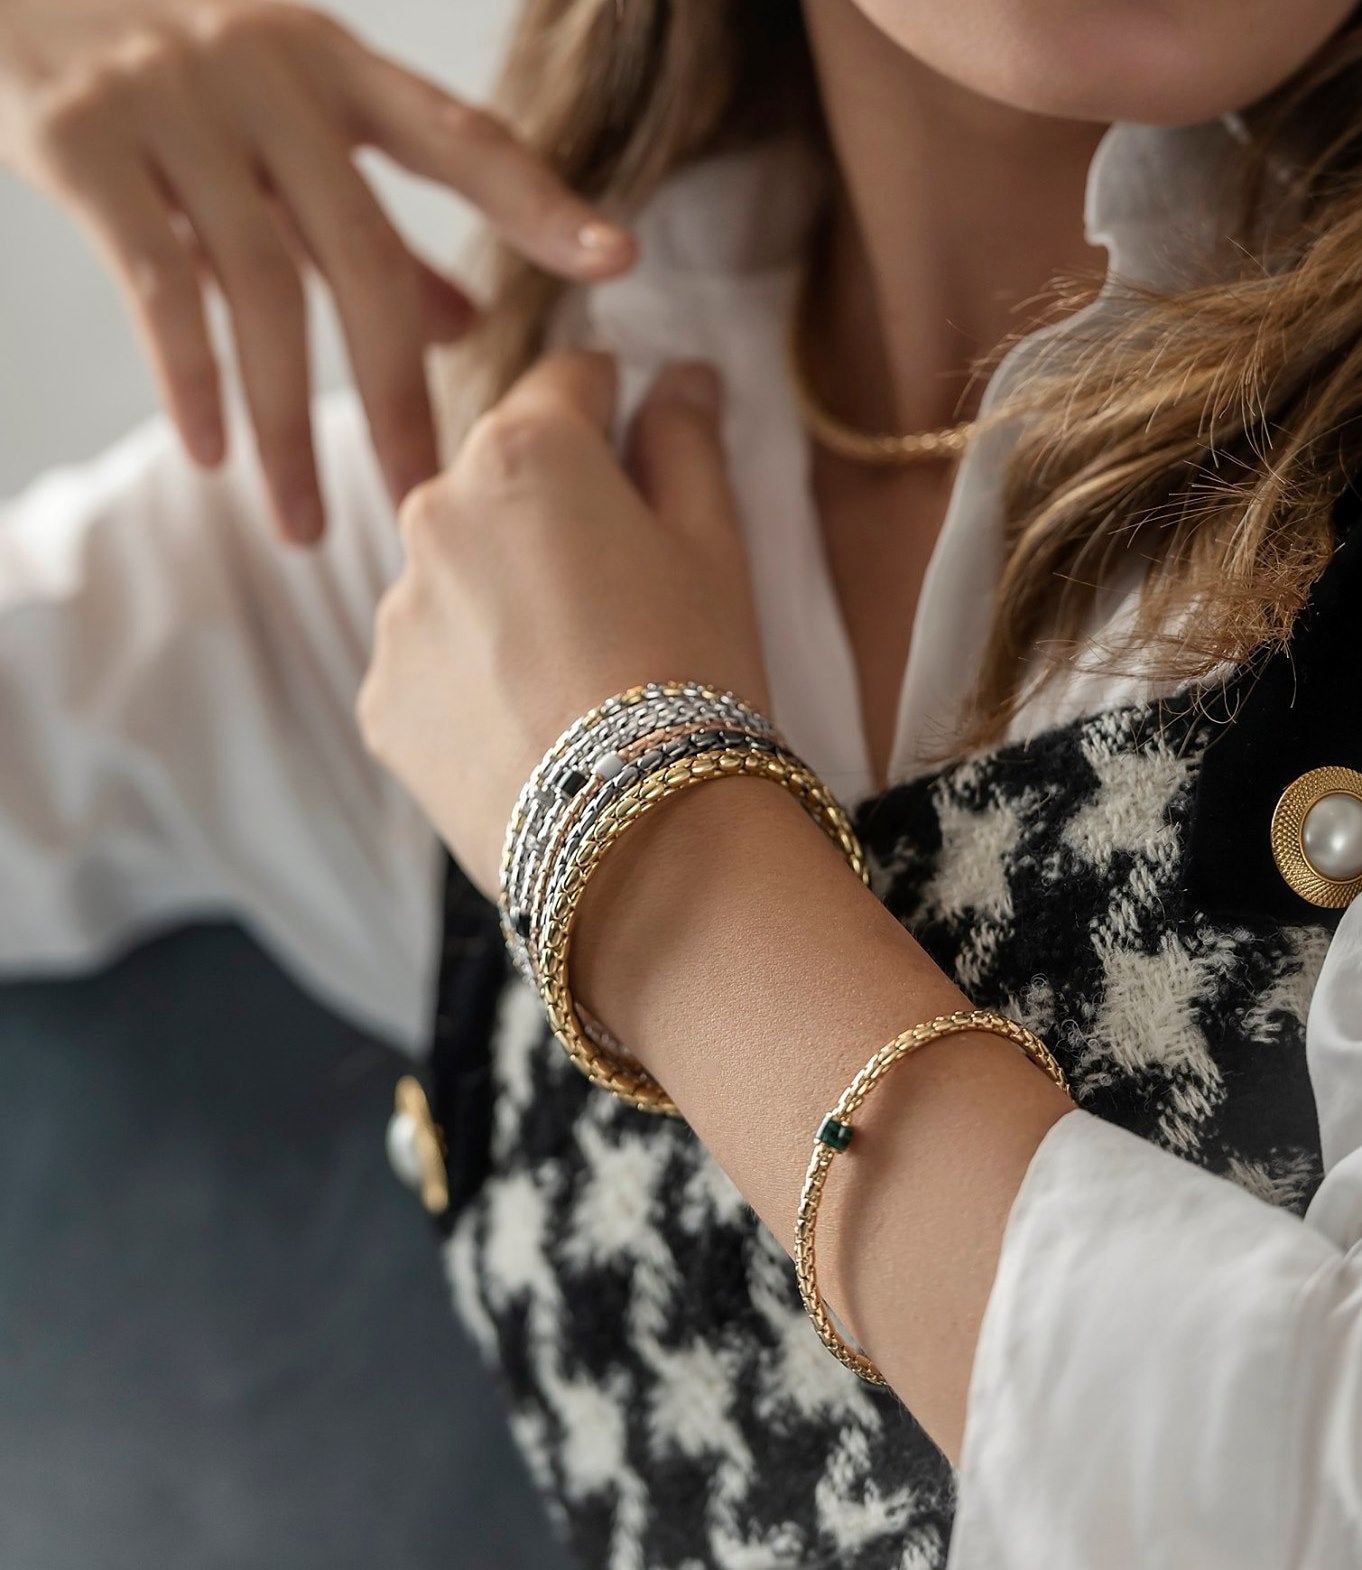 Chimento Stretch Spring Bracelet (Small) in 18k Rose Gold - Orsini Jewellers